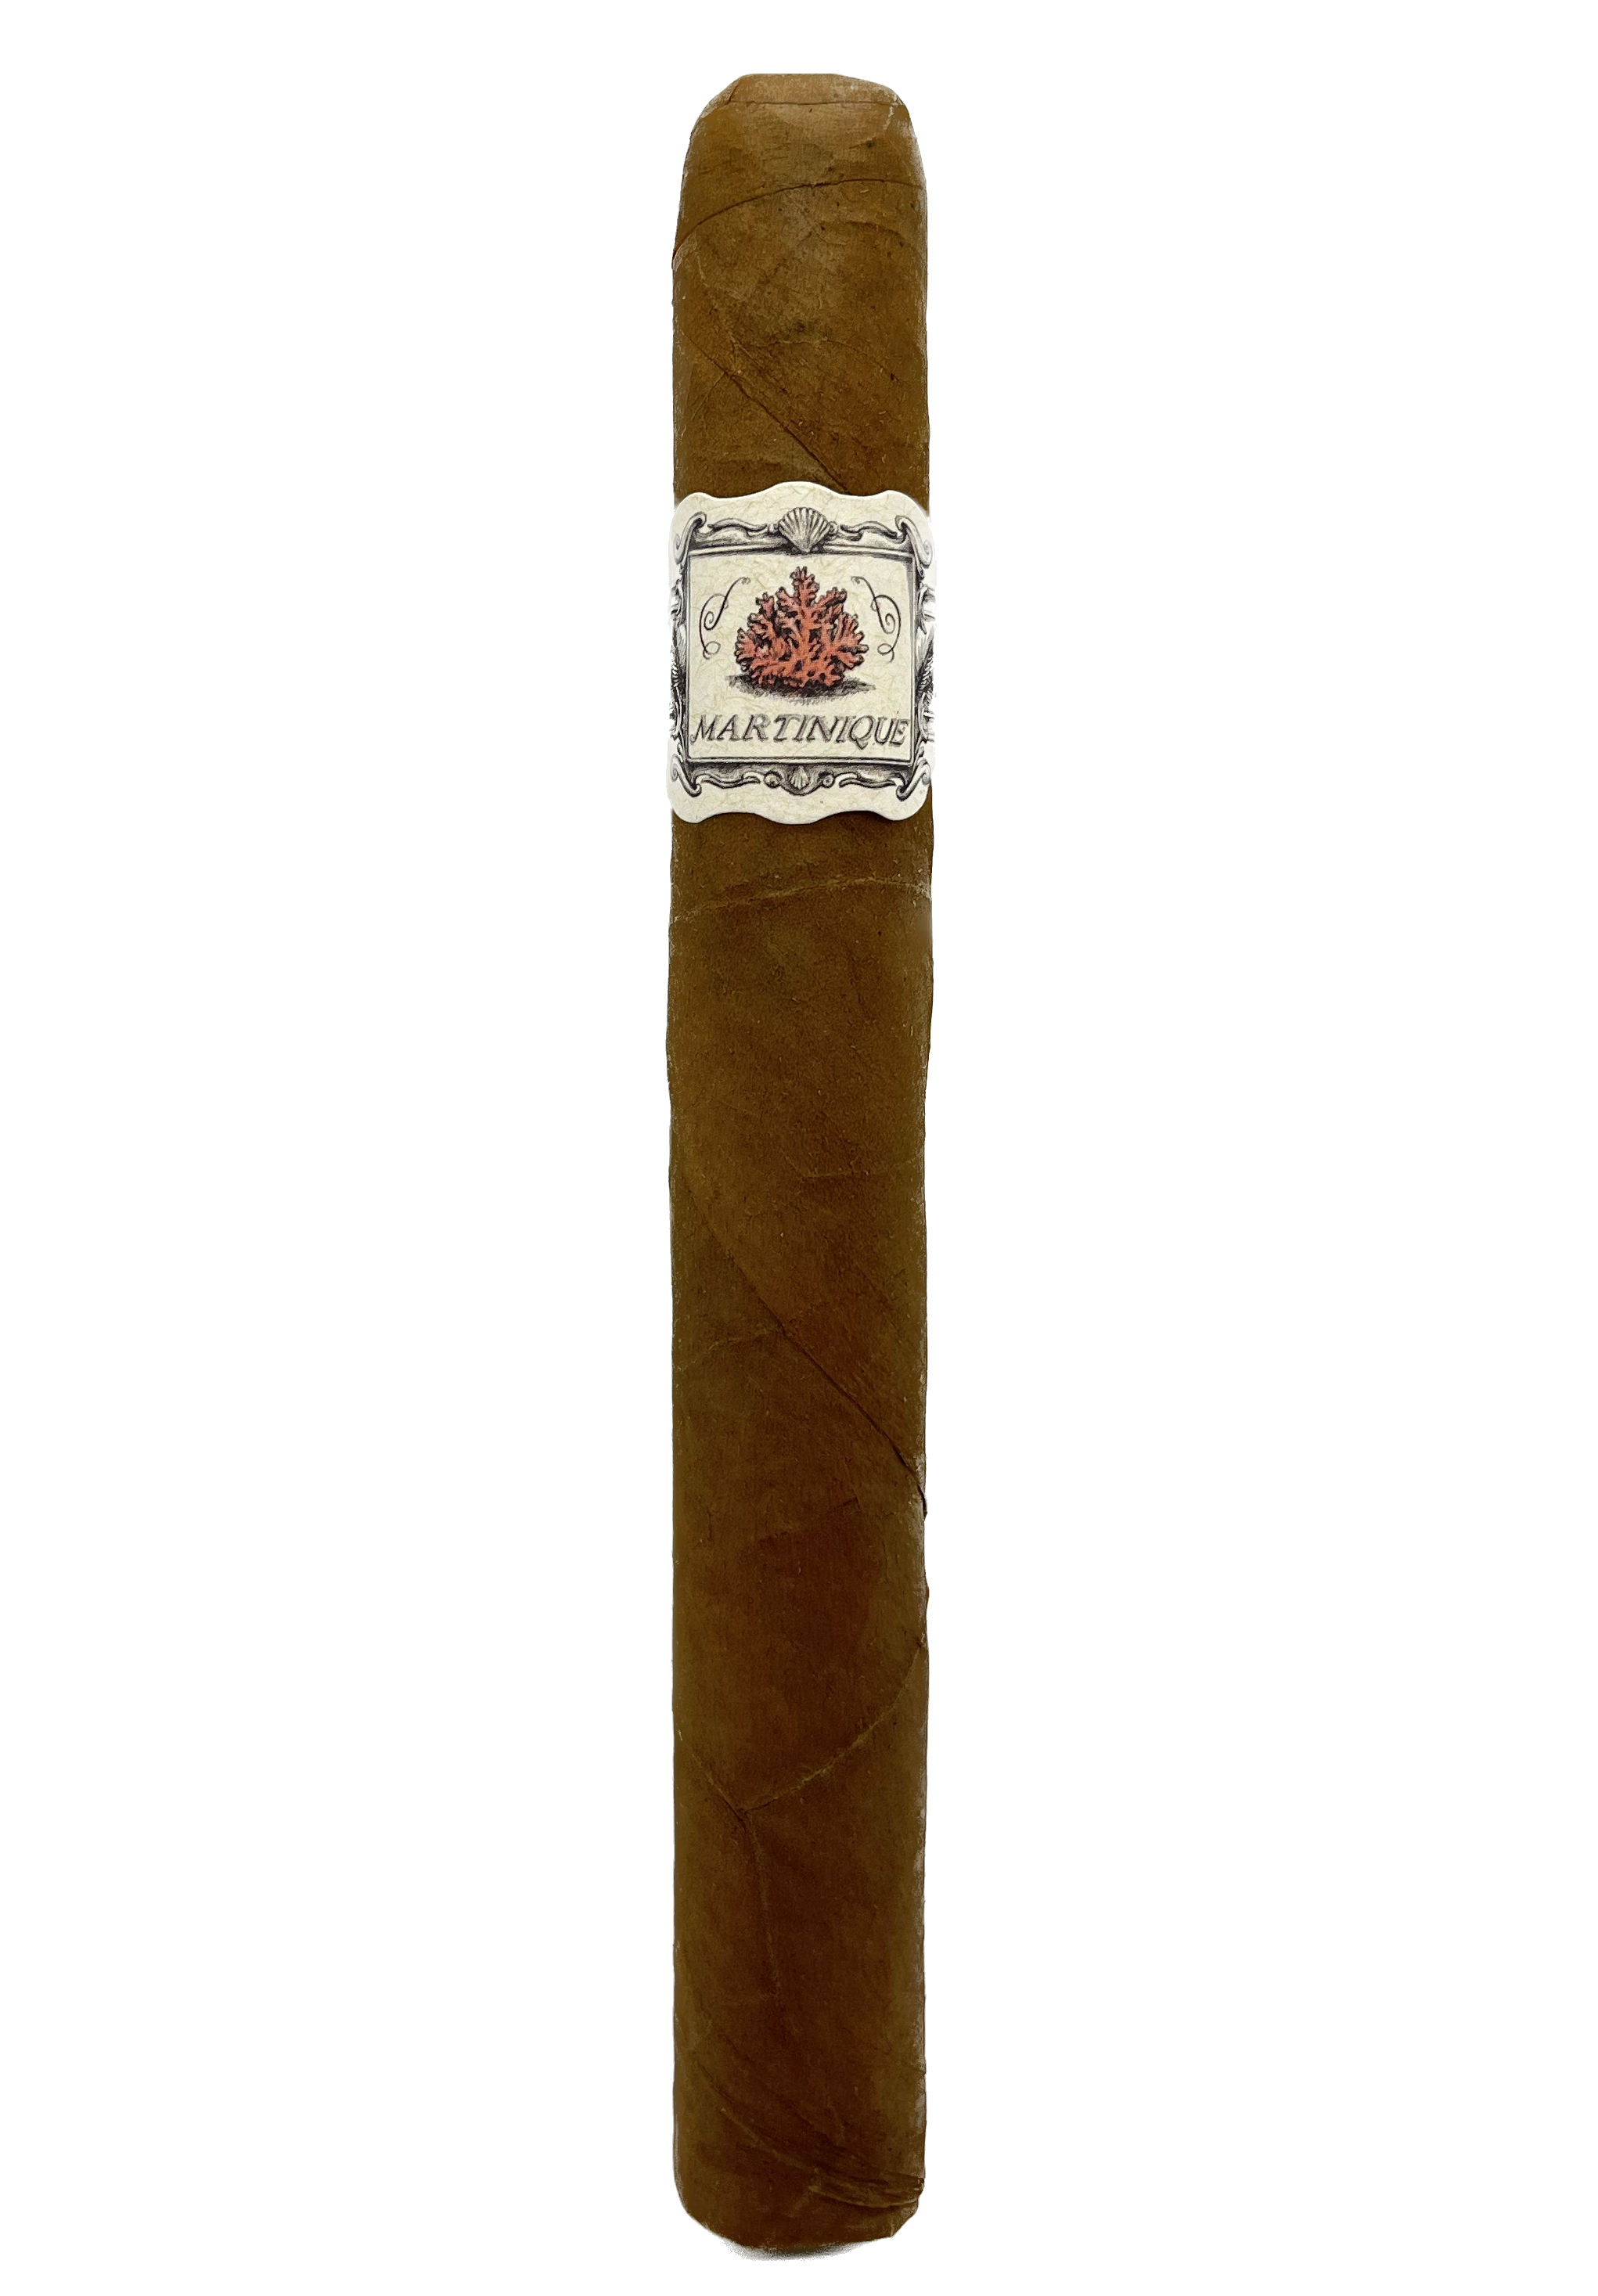 Principle Martinique Cigar